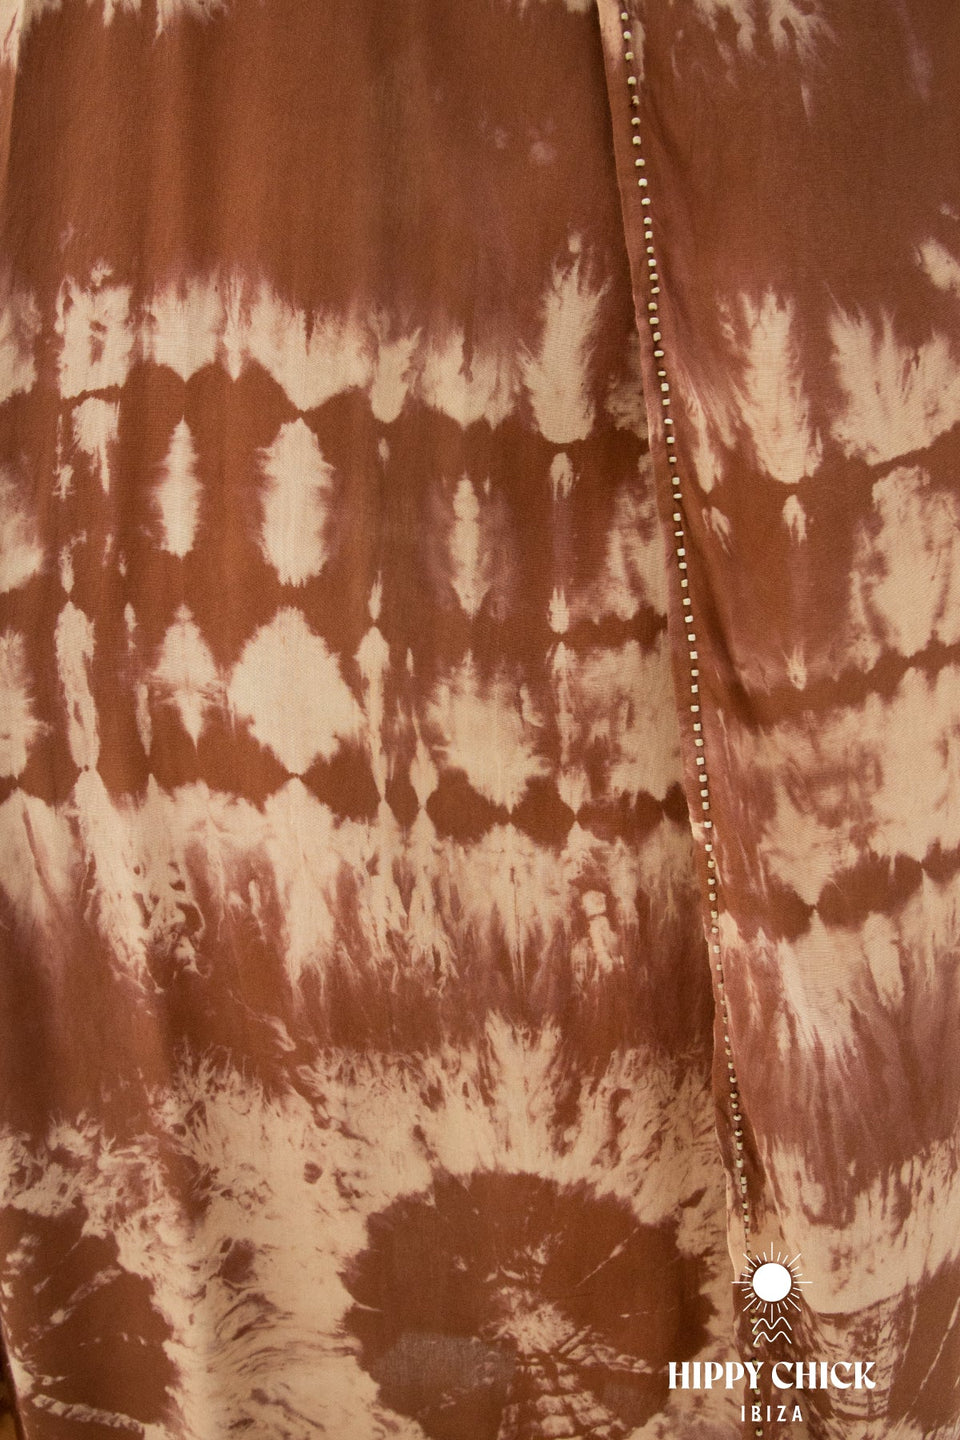 Avenly Long Dress // Batik Abstract